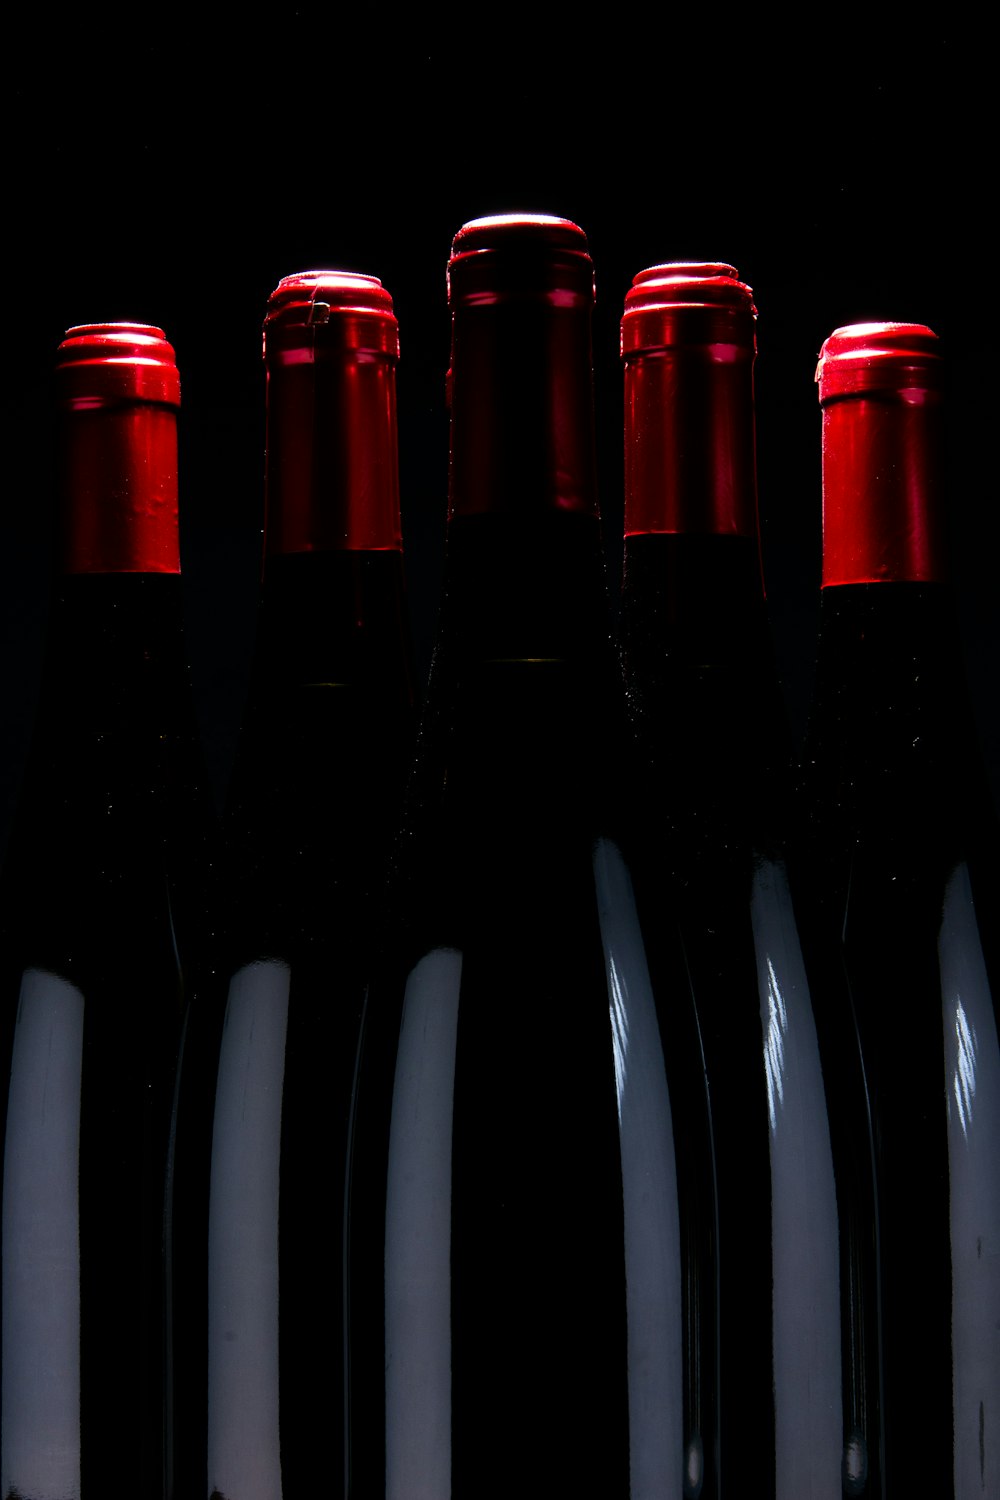 cinque bottiglie nere verticali